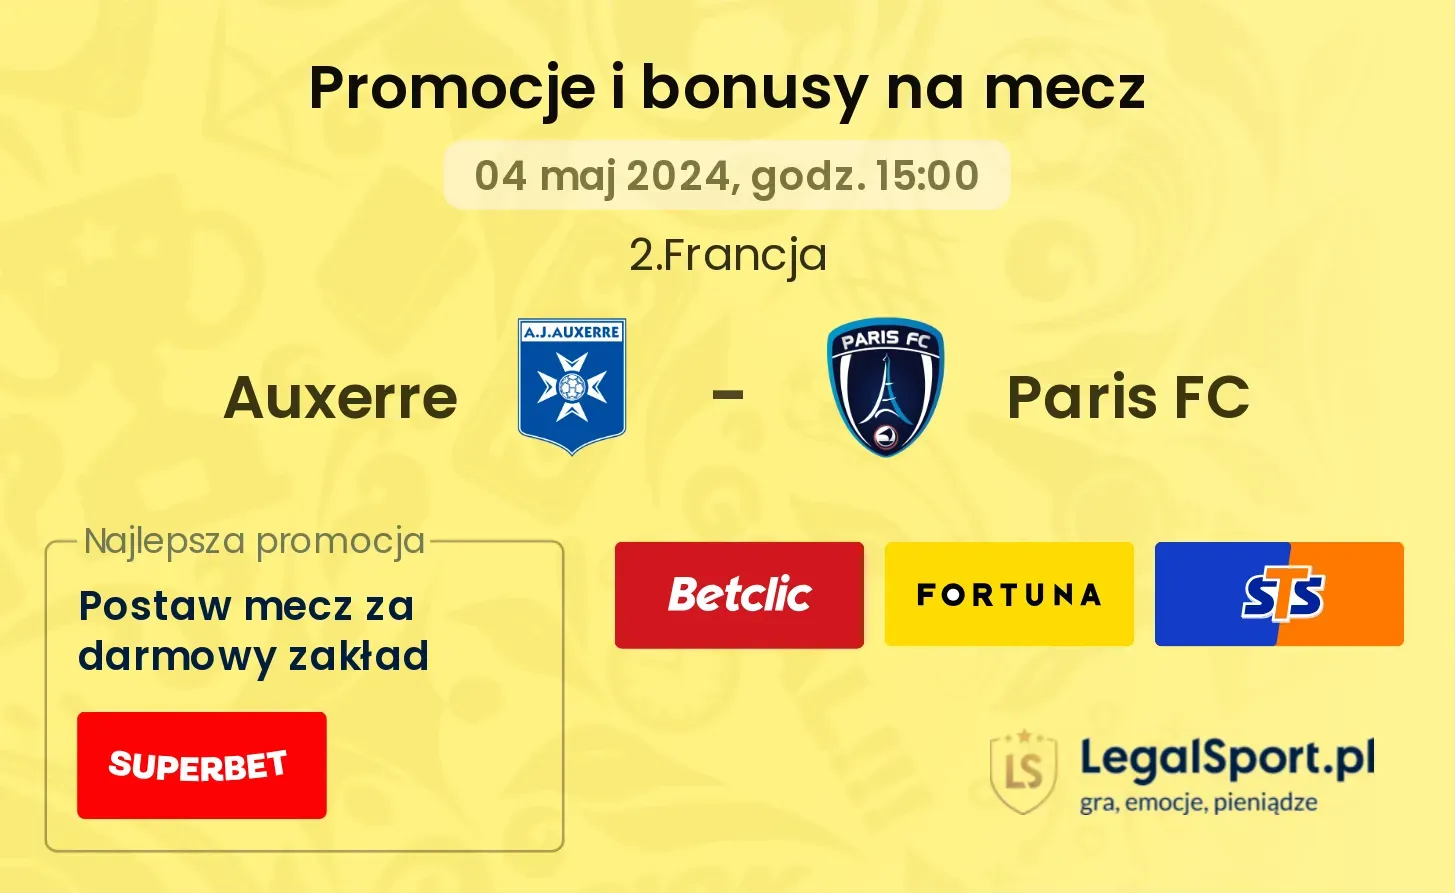 Auxerre - Paris FC promocje bonusy na mecz